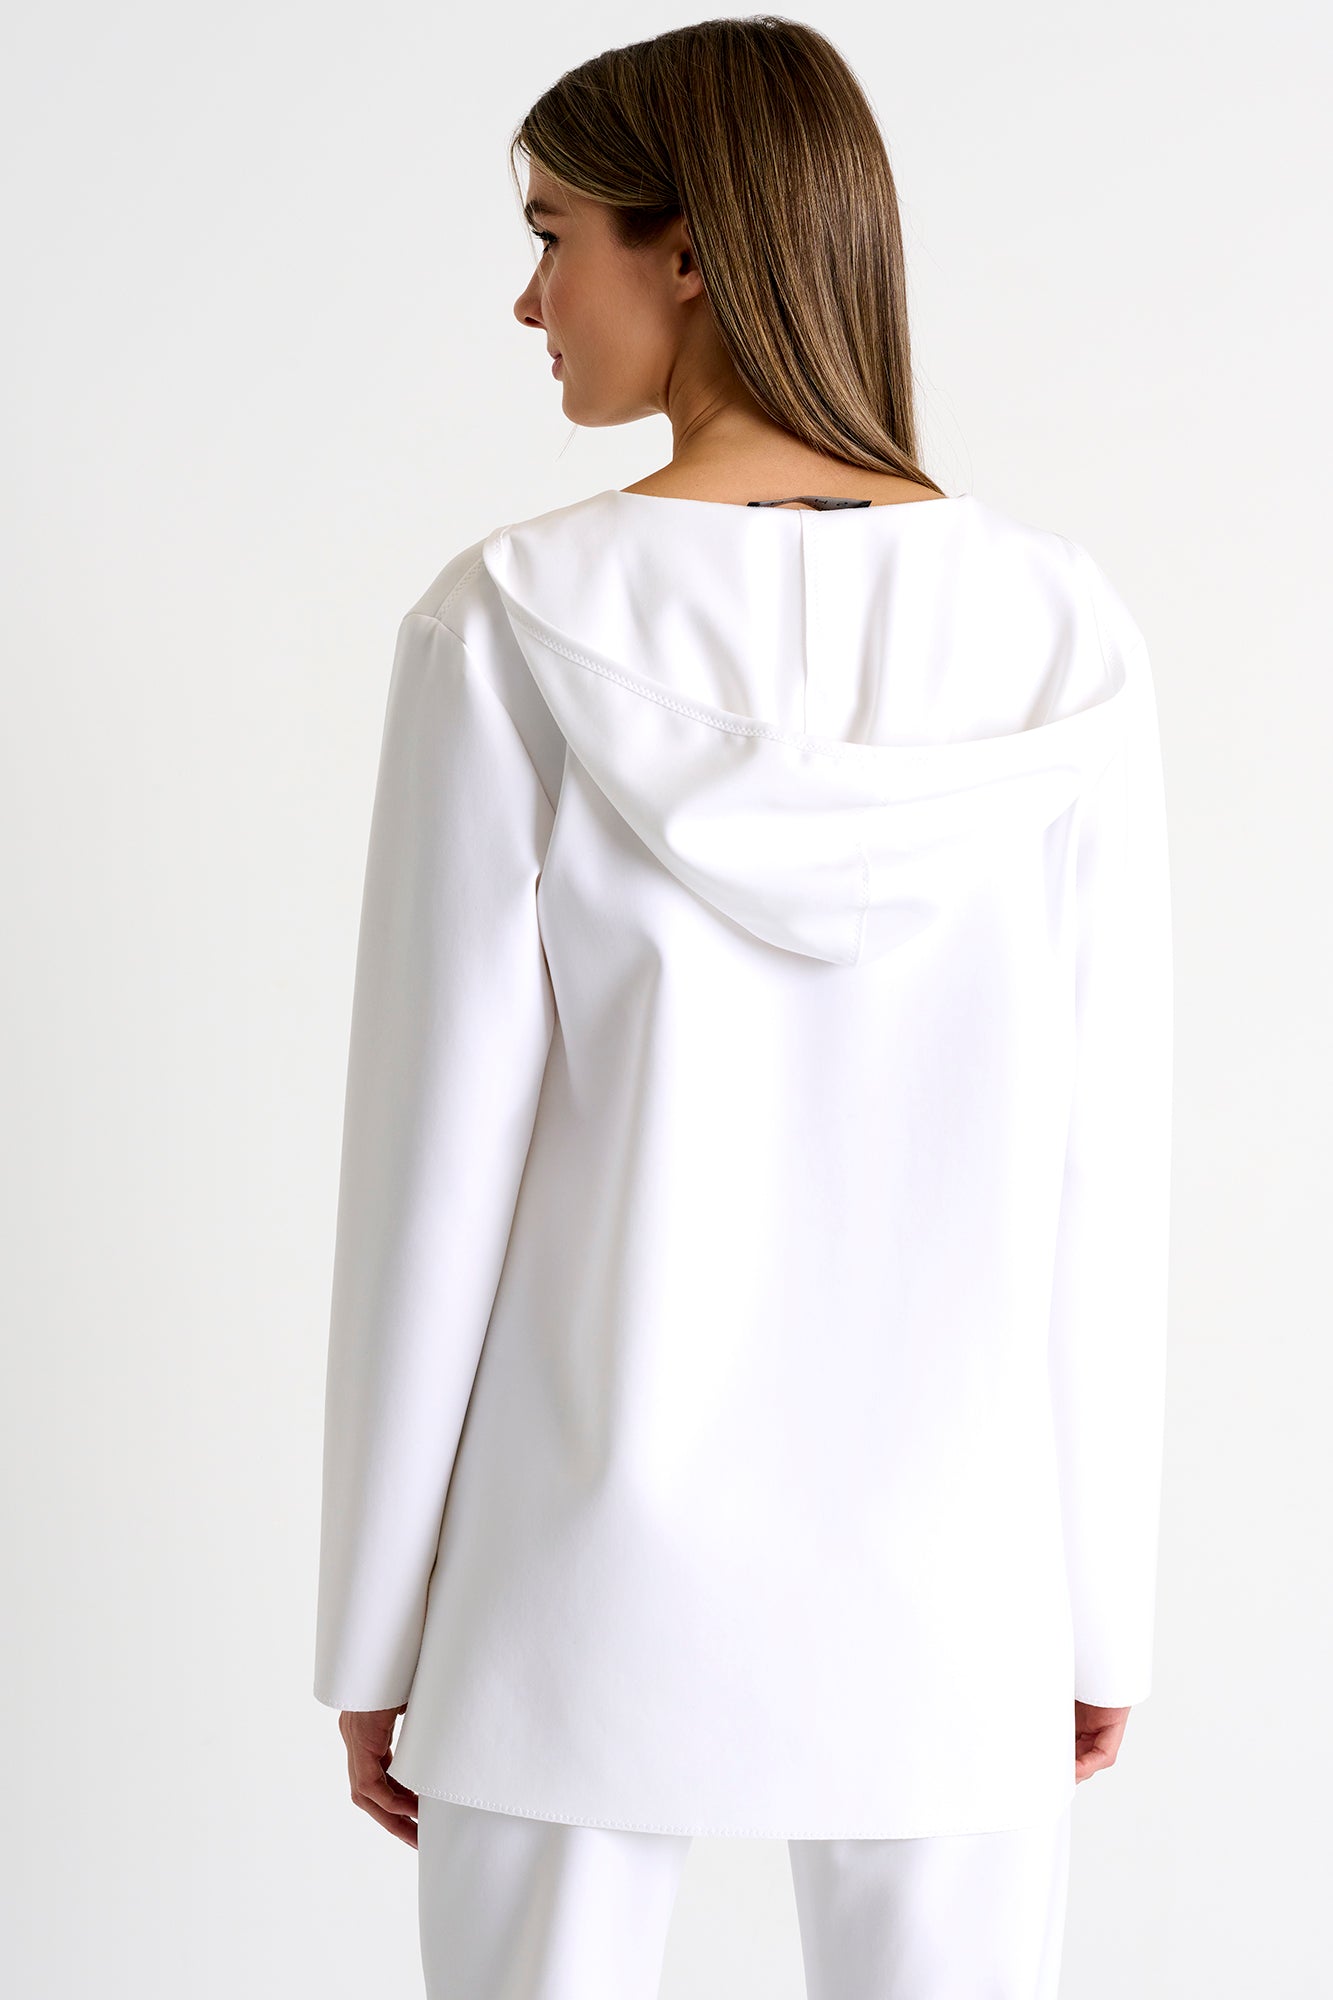 Hooded Long Sleeve Top 2 / 000 White / 75% POLYAMIDE, 25% ELASTANE